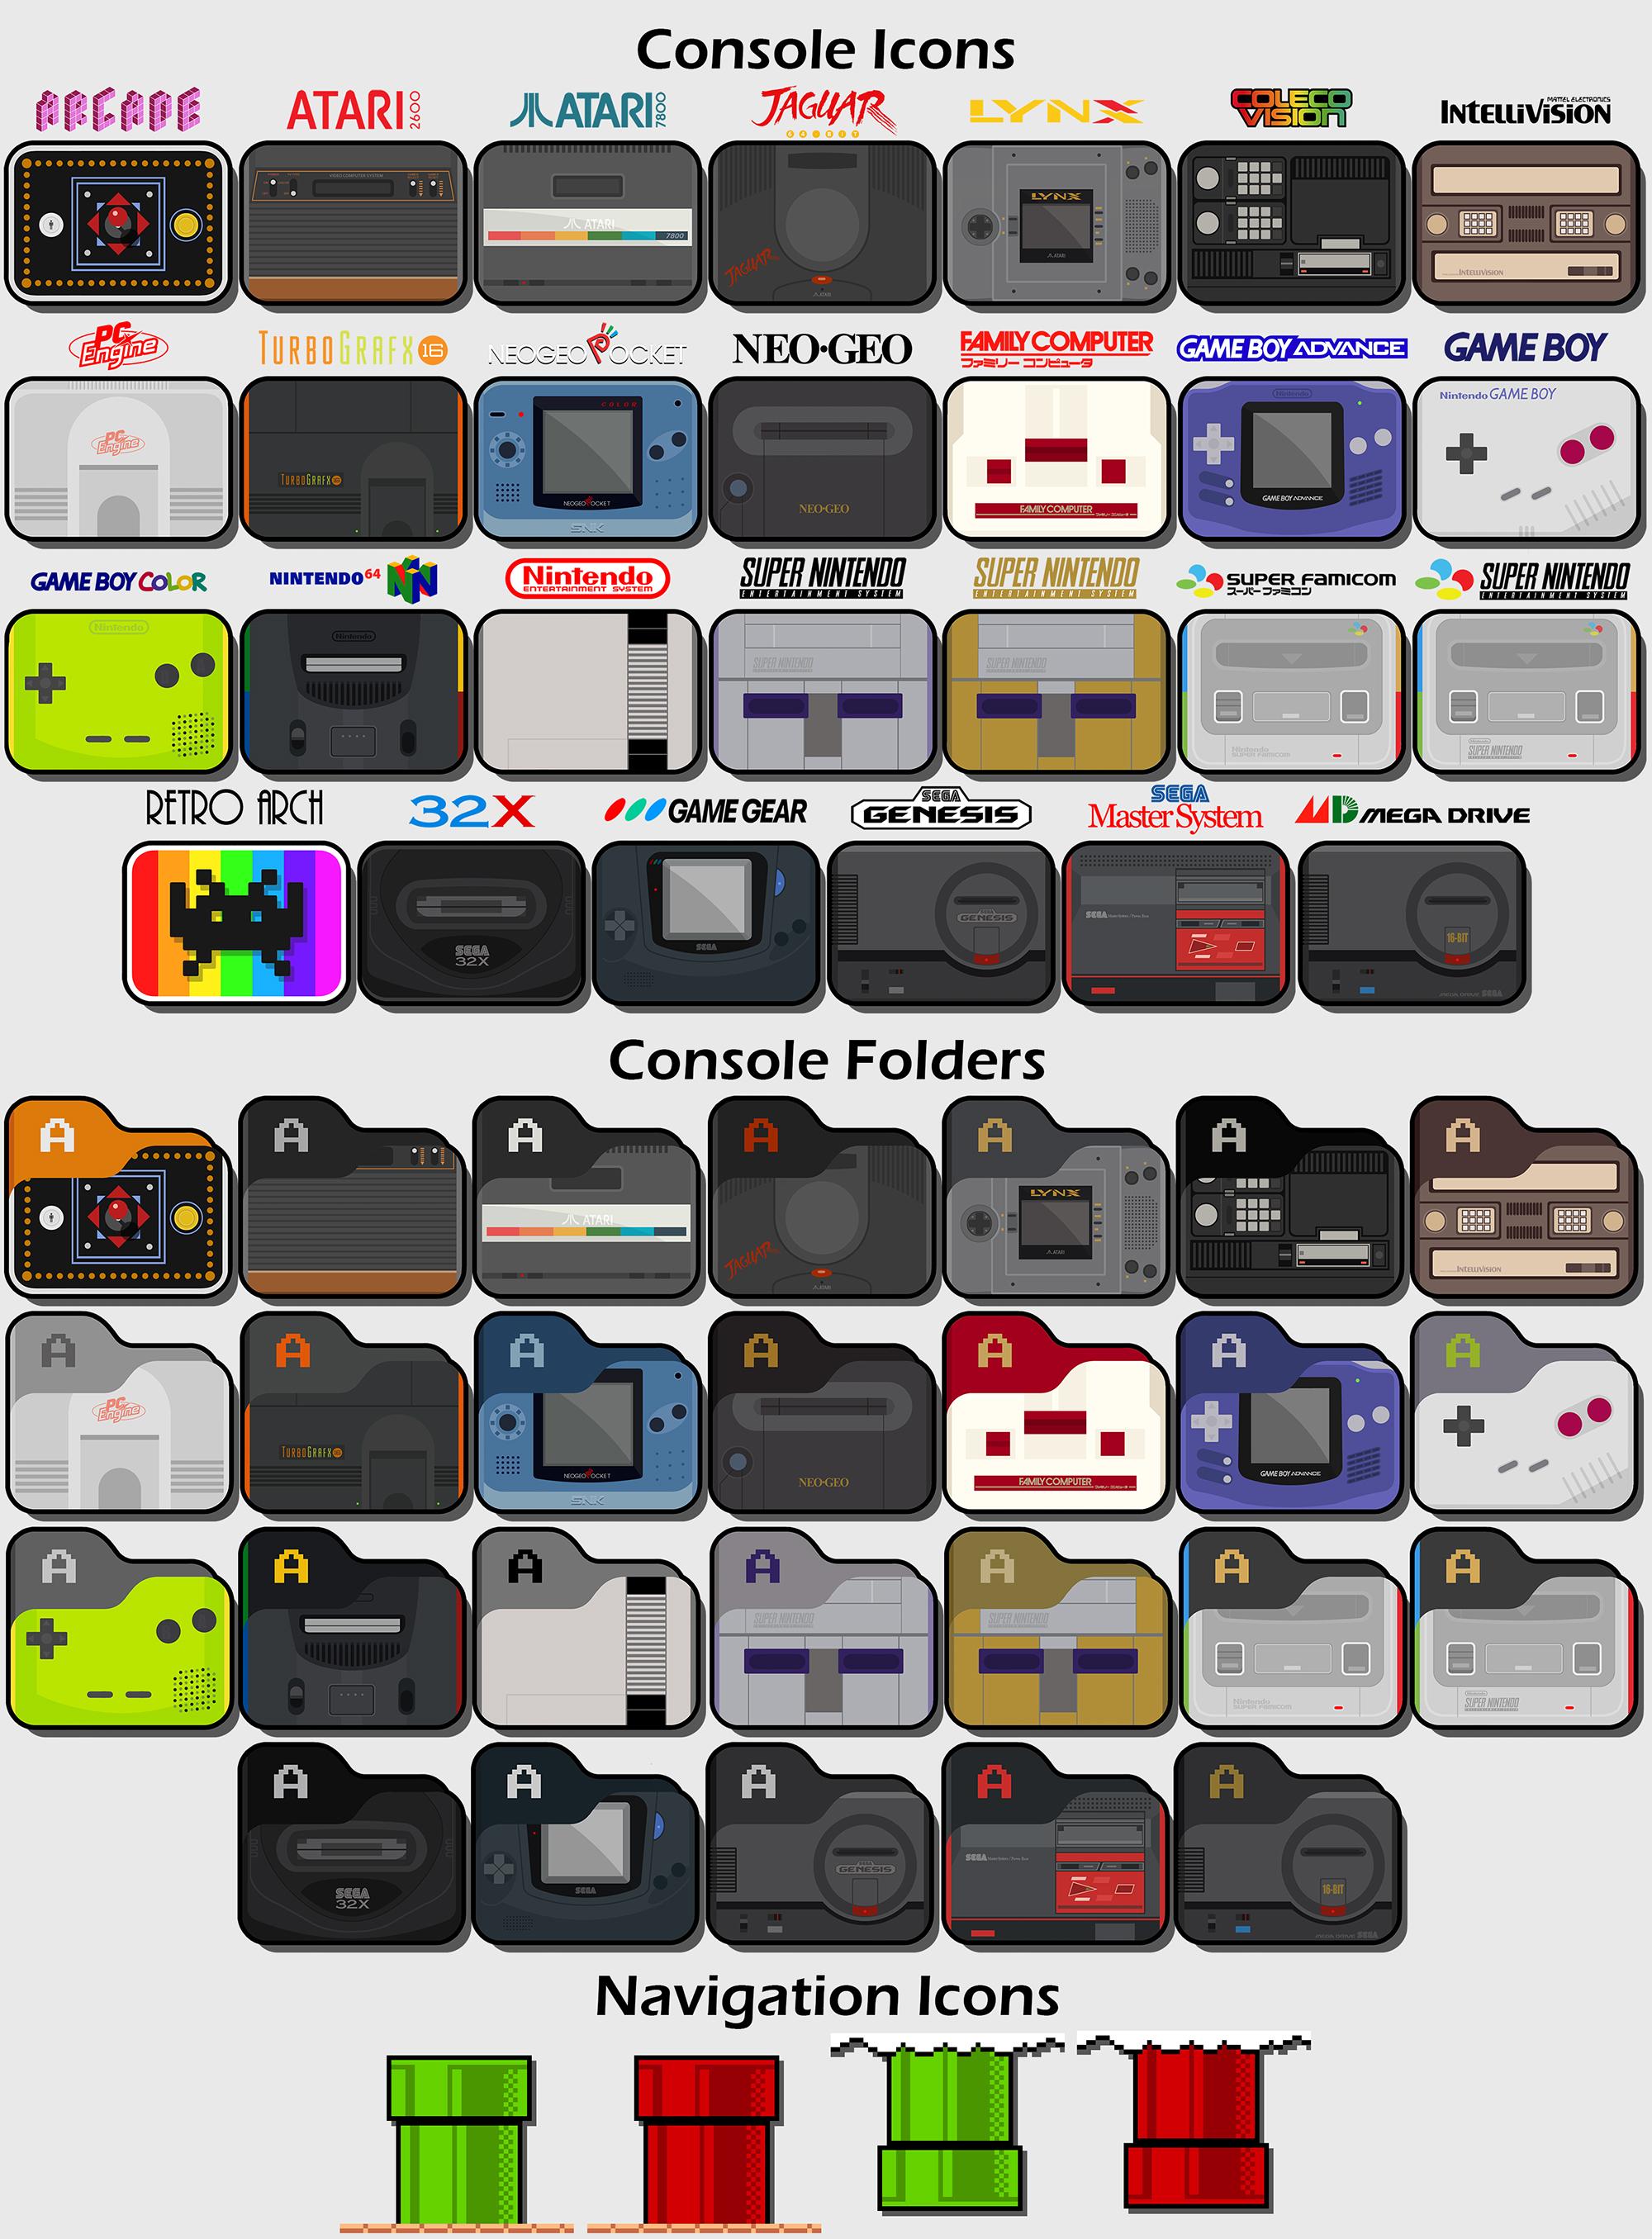 Nintendo Icons - Download 33 Free Nintendo Icon (Page 1)